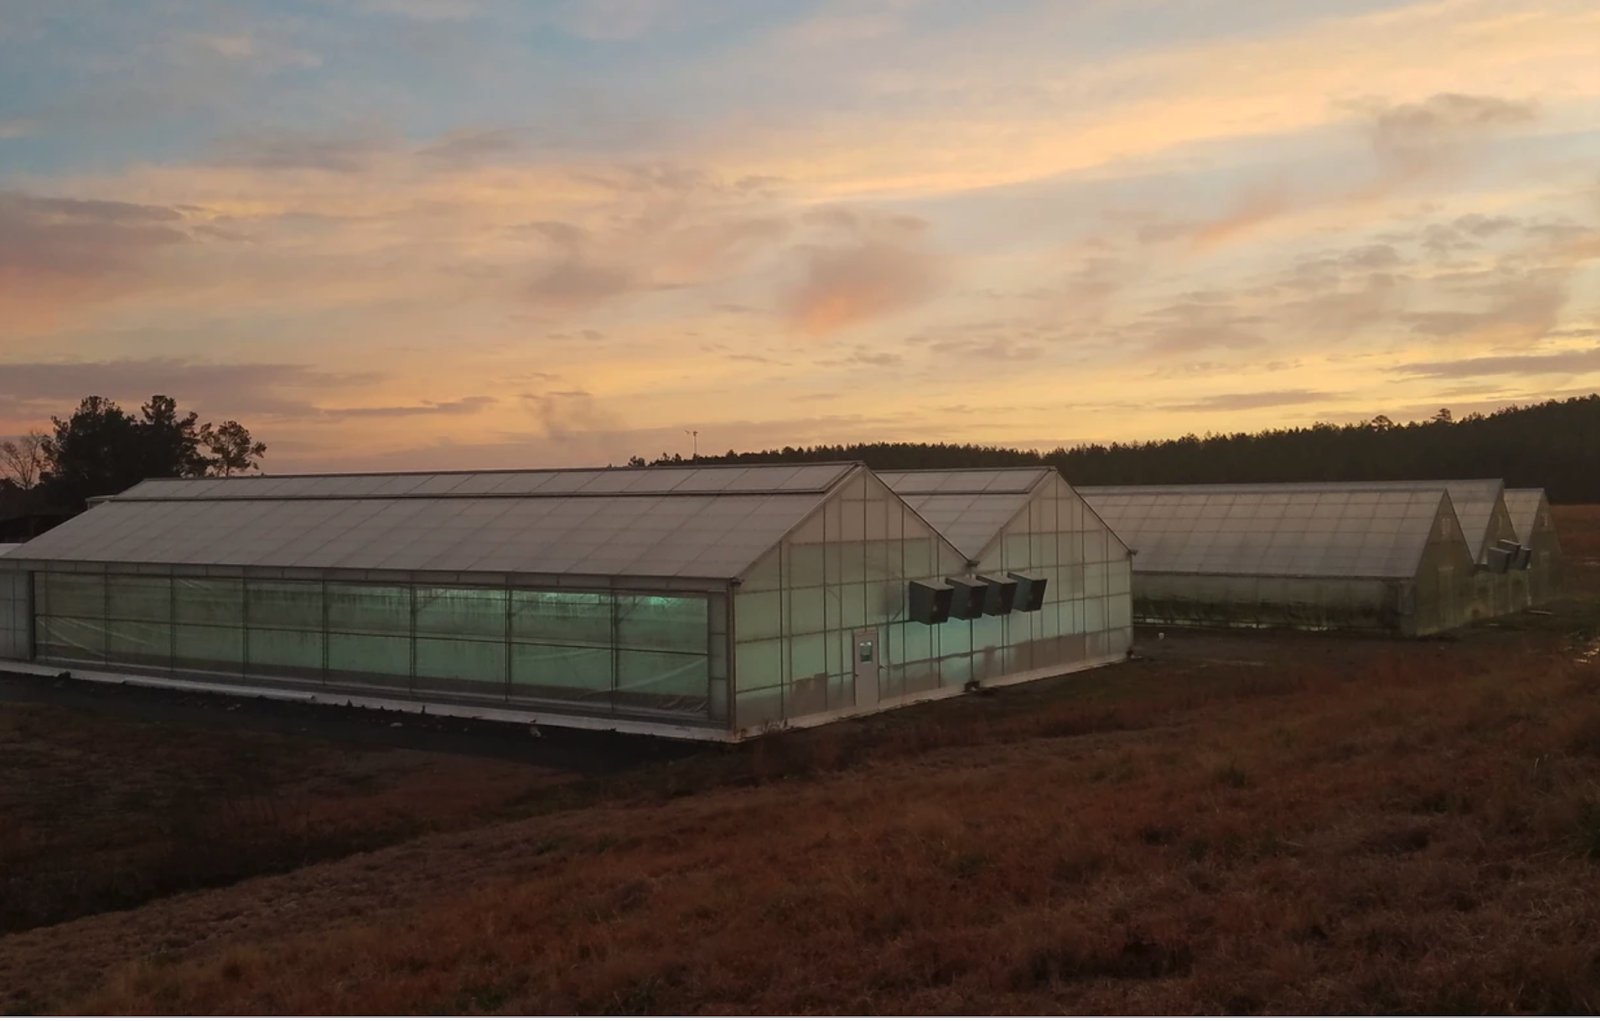 kSXtsvsSFYu5DVI6N8kg4AsUnv0Nq mZ06fyg2TkQukFVrj8OoWbu3UdWKah7qF7oIHuF5MqZsIsTsVwytl4GjdzmI1b1jZwCT8r6mGkul0PevsBgJX7zCG5Ned0AYB6C6yIWhAq TekLinks’ founder Stuart Raburn gets back to entrepreneurial roots with latest Southern Organics aquaponic farm (photos)